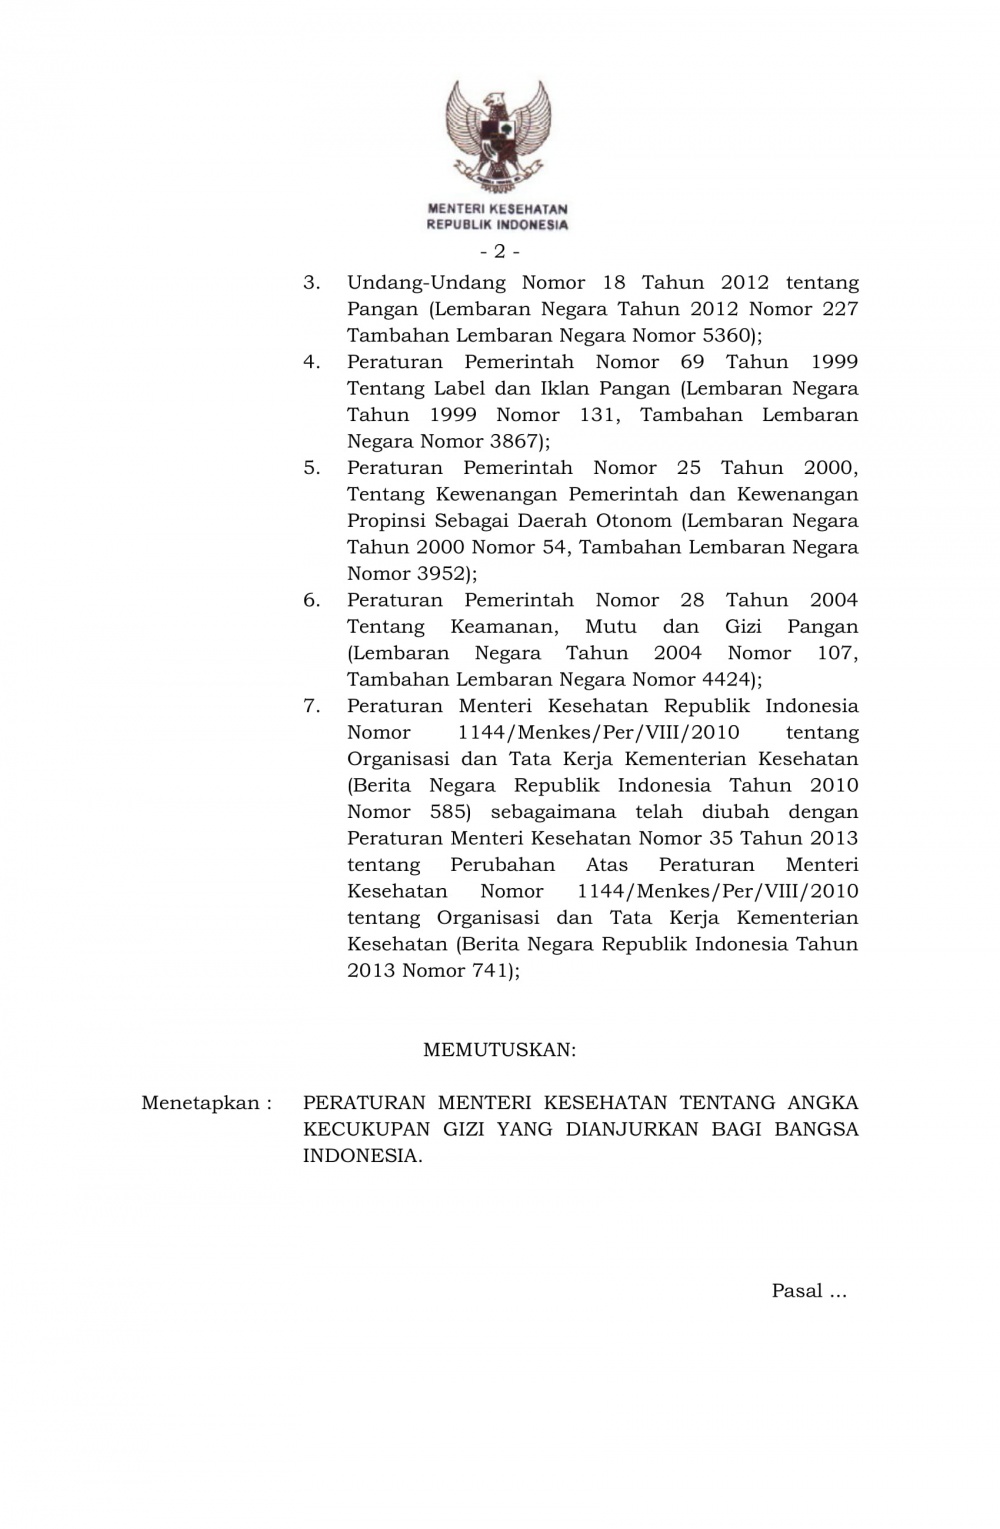 PMK No. 75 ttg Angka Kecukupan Gizi Bangsa Indonesia-02.jpg